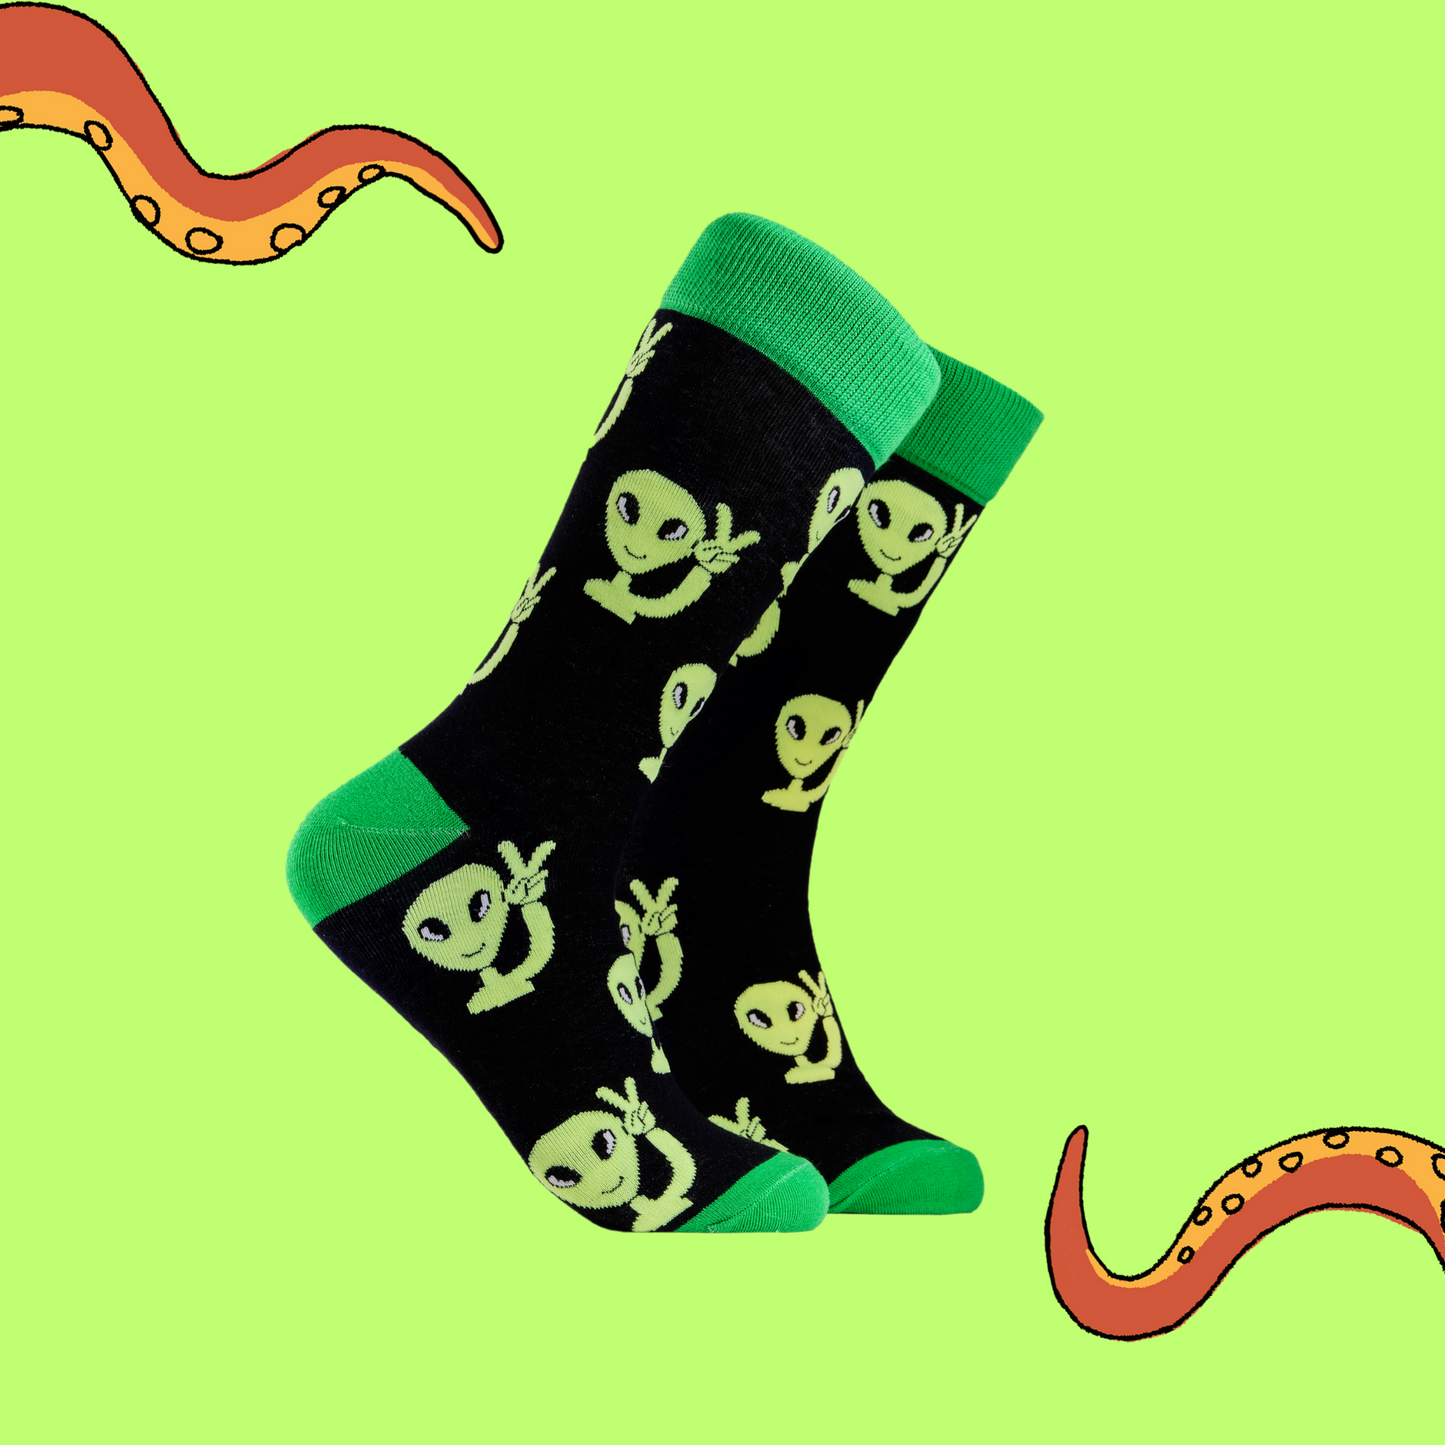 Alien Socks - Peaceman. A pair of socks depicting peaceful aliens. Black legs, green cuff, heel and toe.